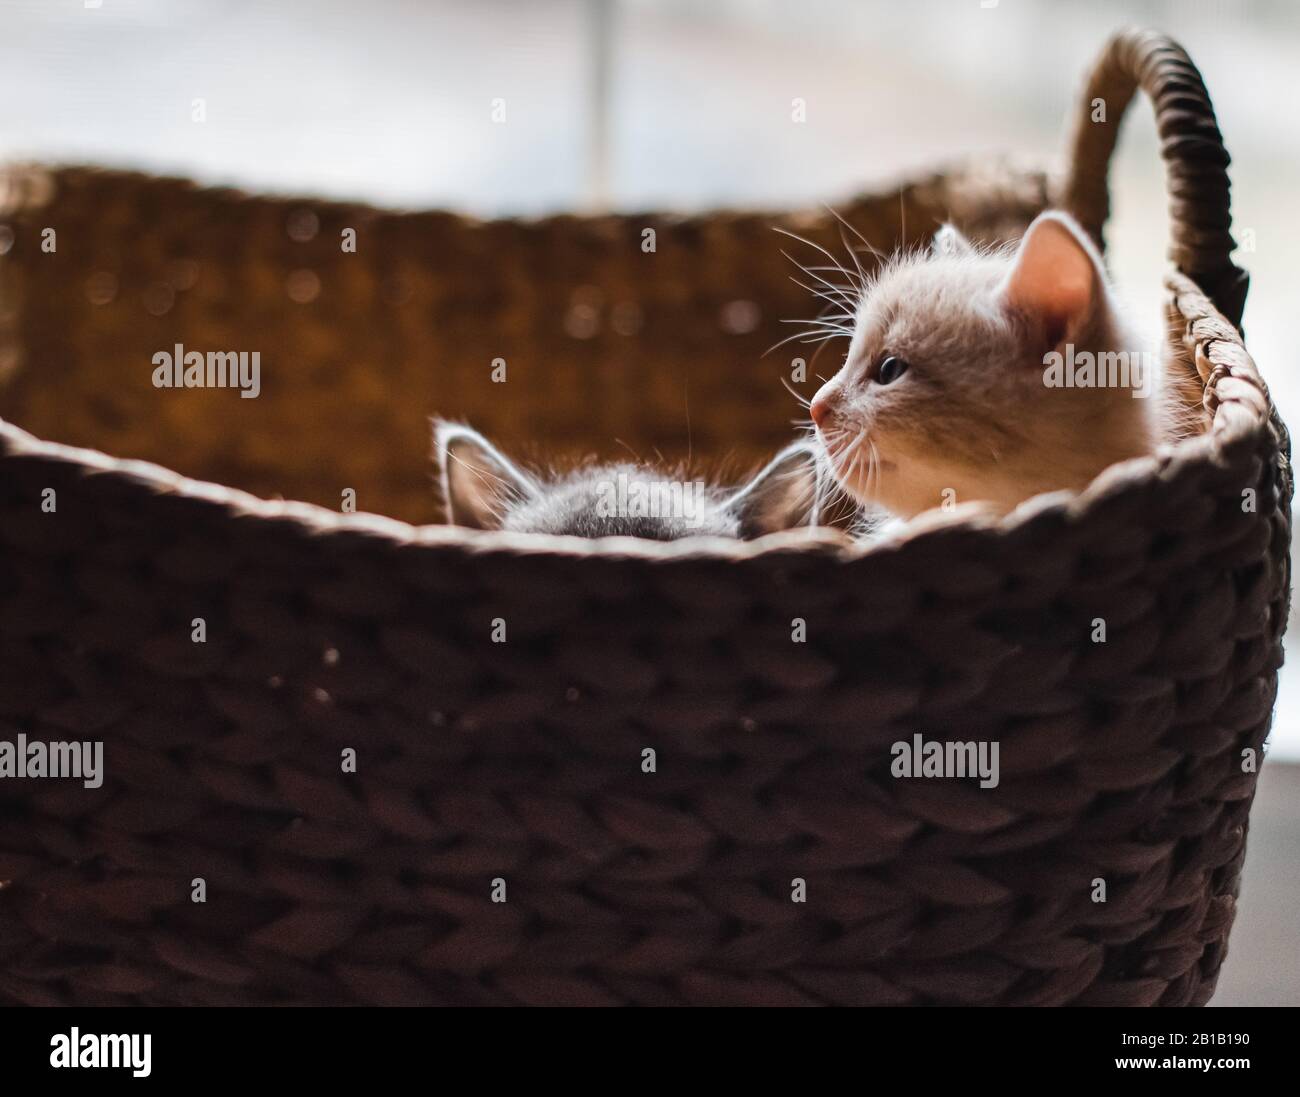 Two cute kittens peeking over the edge of a wicker basket. Stock Photo